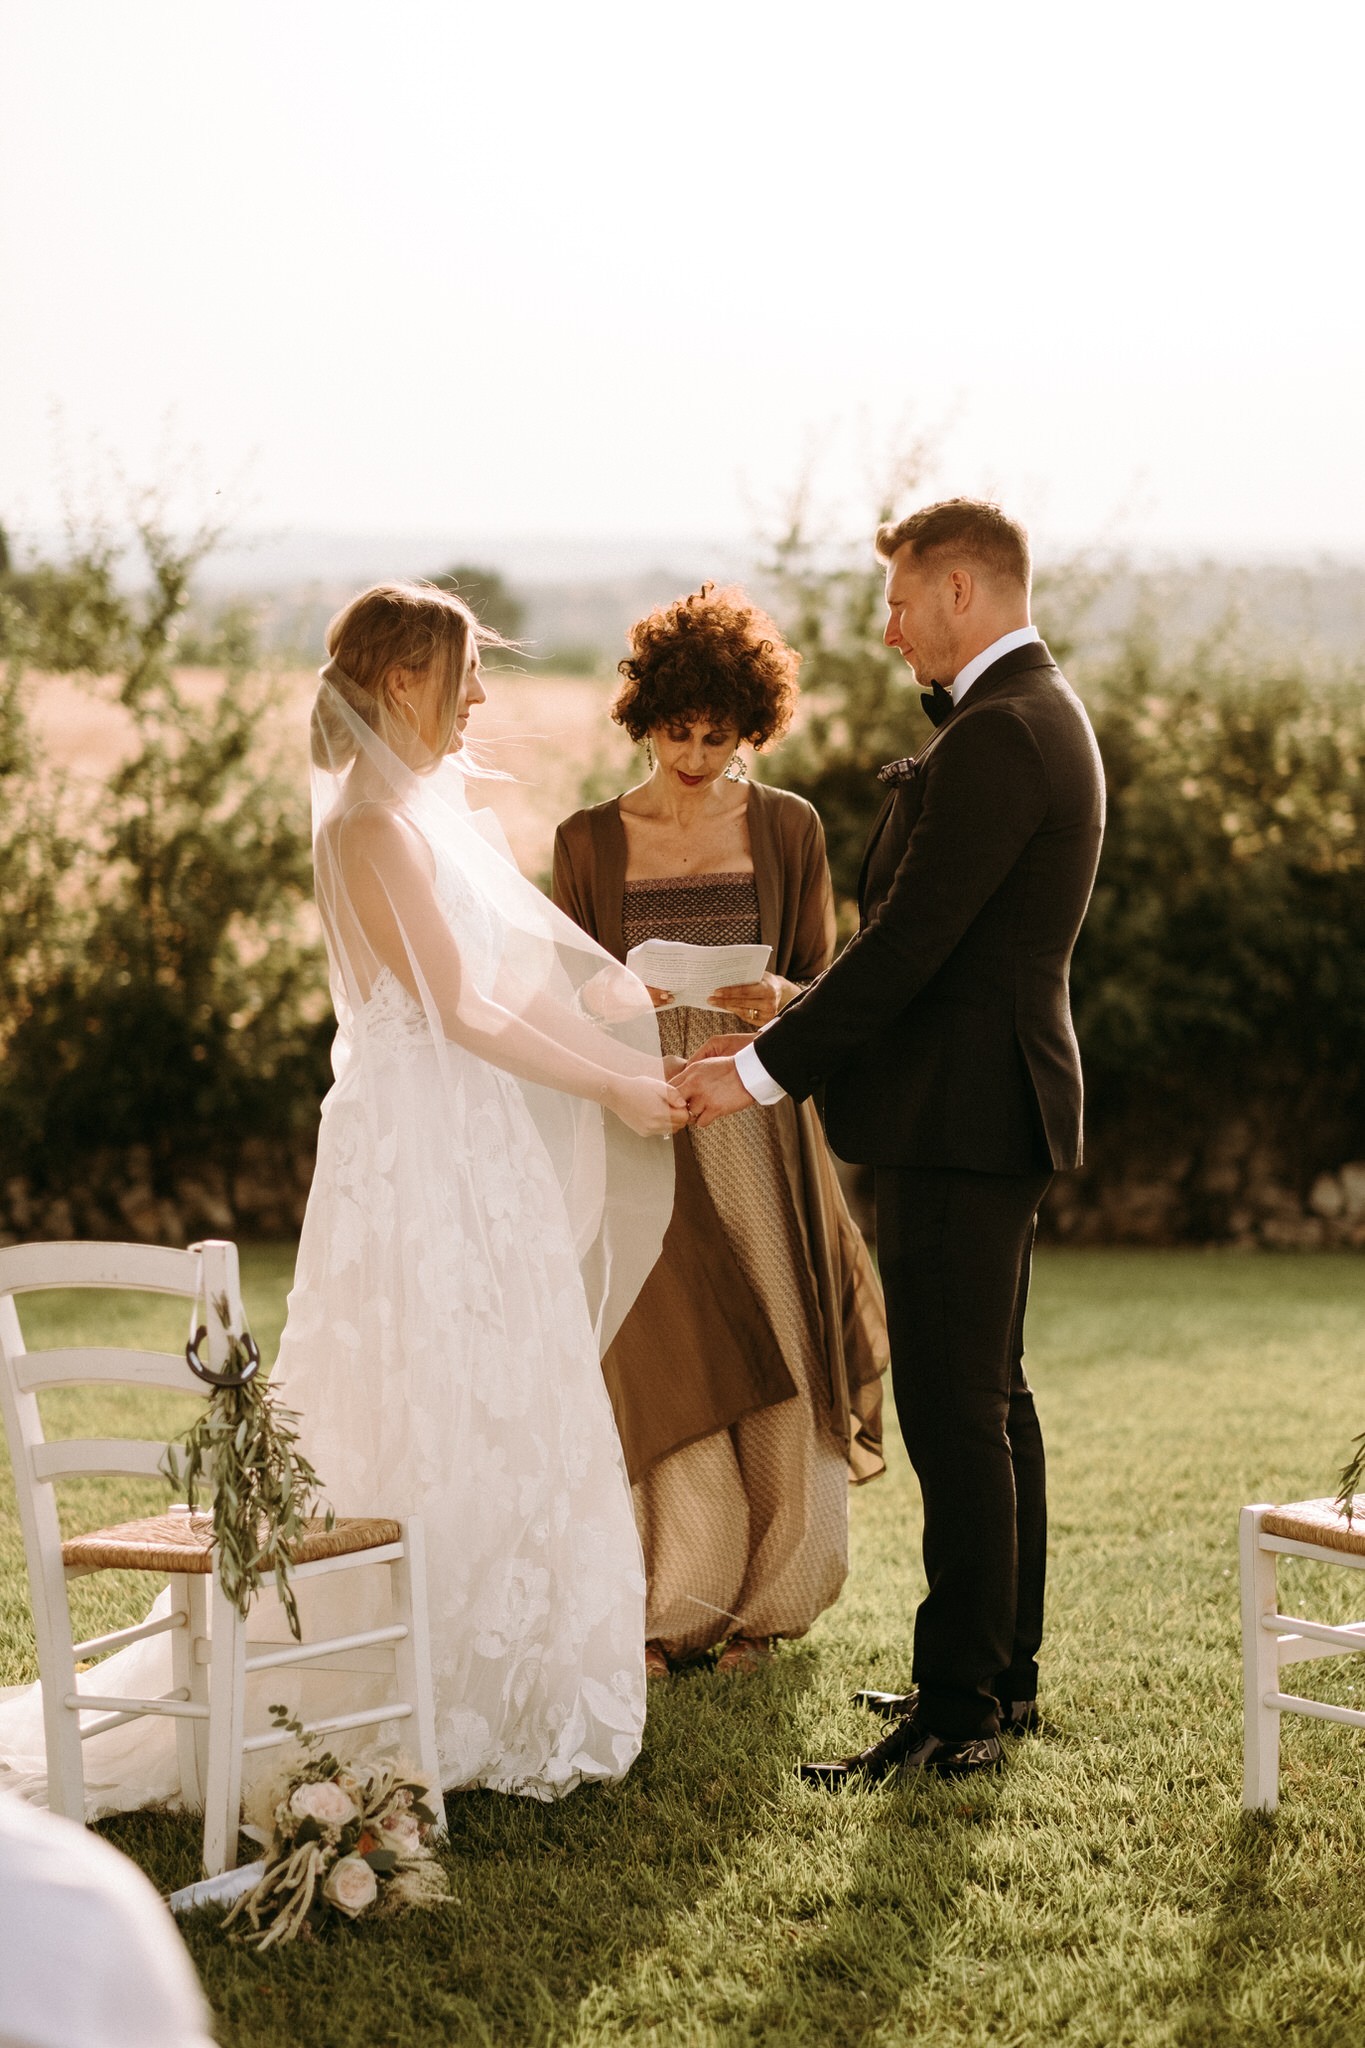 Ceremony - Wedding in Apulia, Italy - 35mm